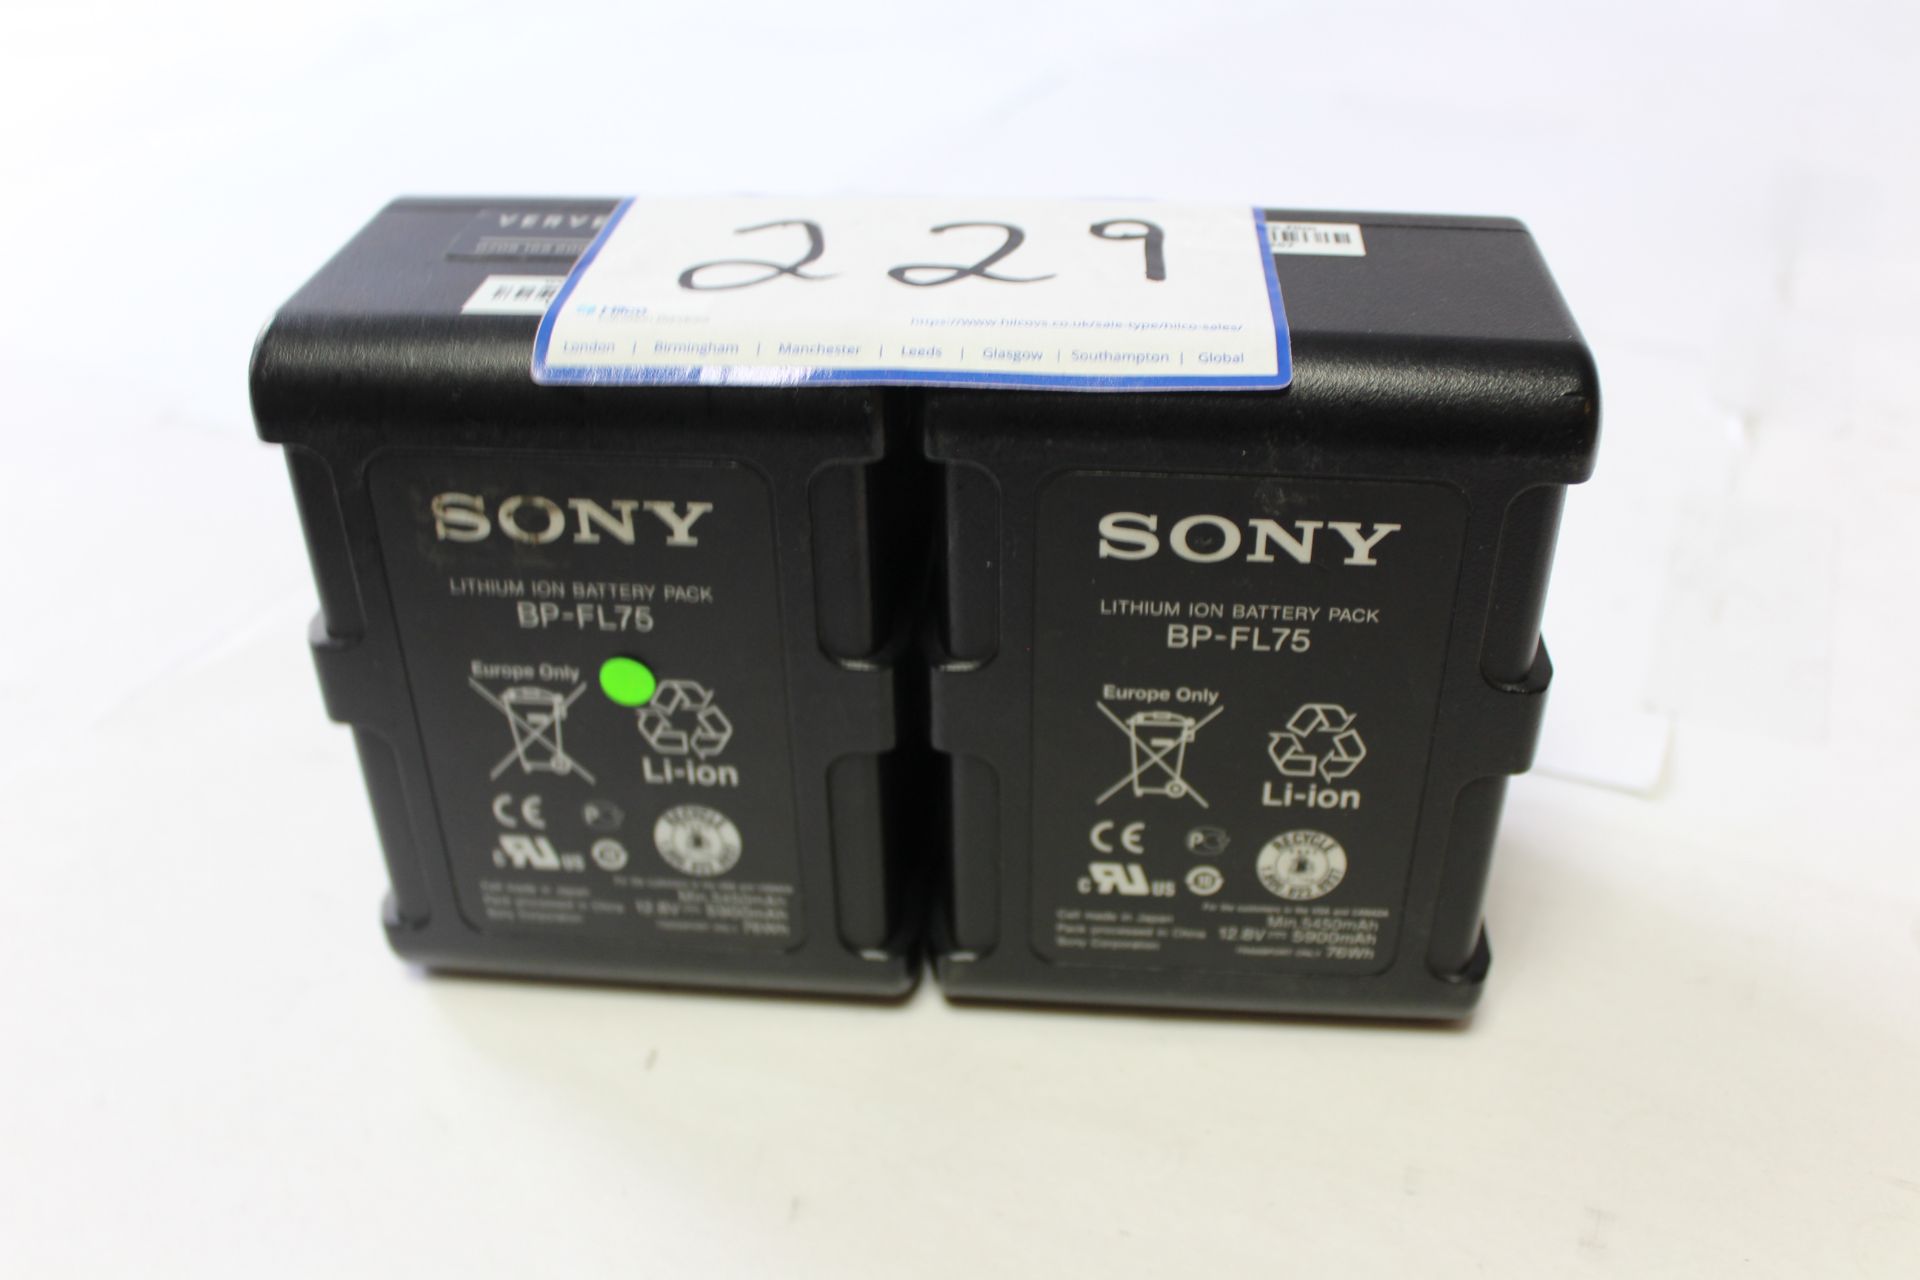 2 Sony BP-FL75 Lithium -Ion Battery Packs